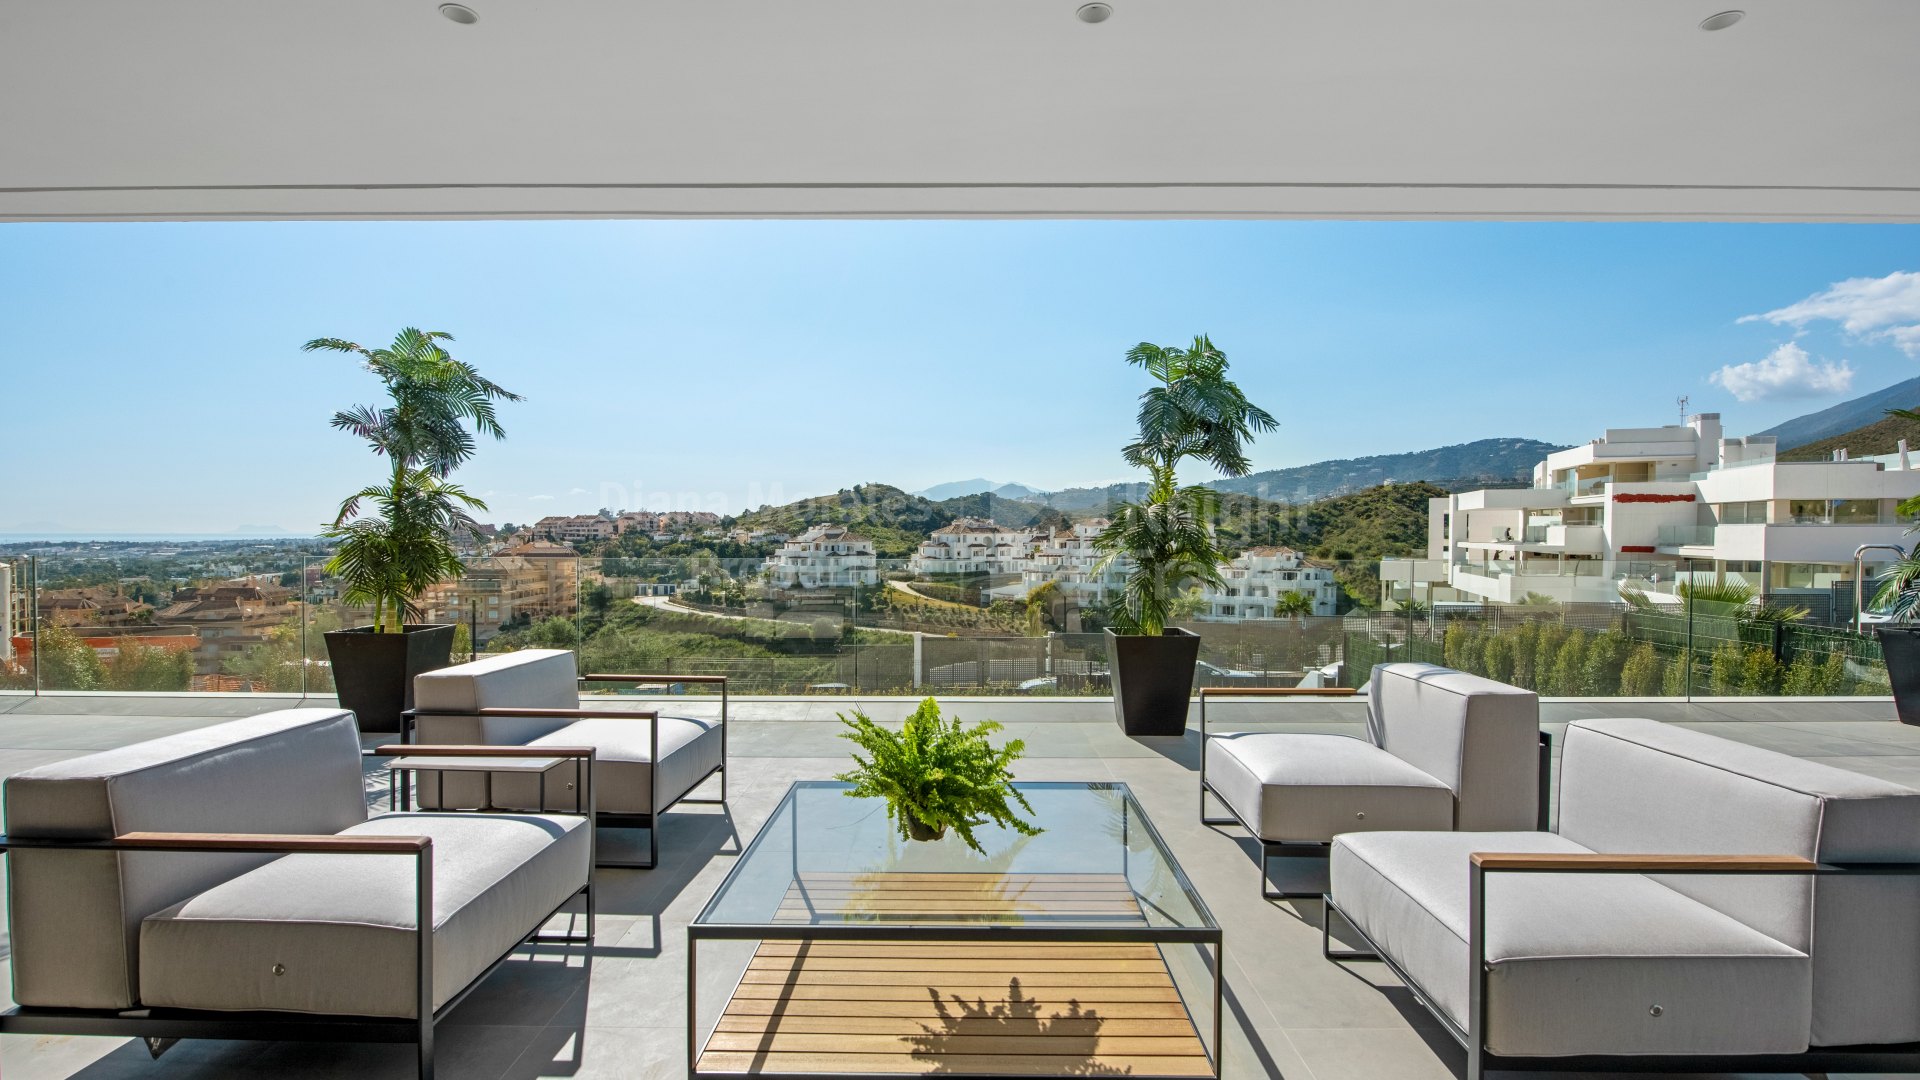 Nueva Andalucia, Villa zum Verkauf mit Panoramablick in bewachter Urbanisation